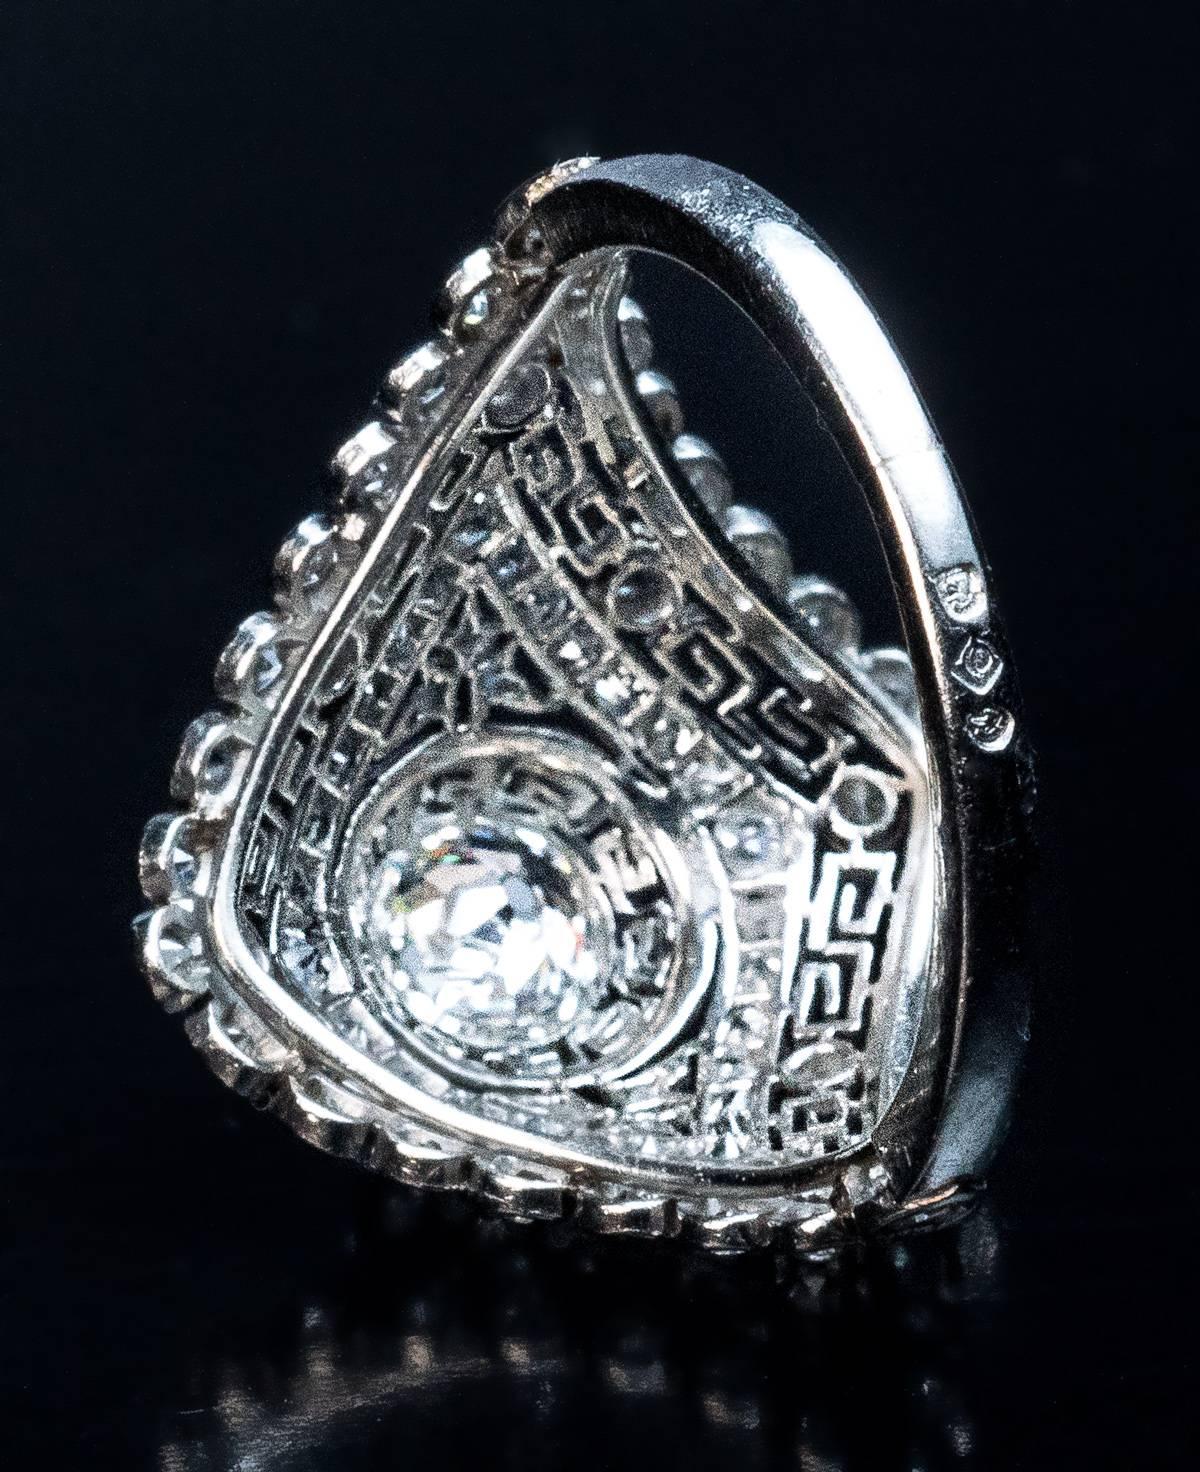 Women's Art Deco Diamond Platinum Engagement Ring